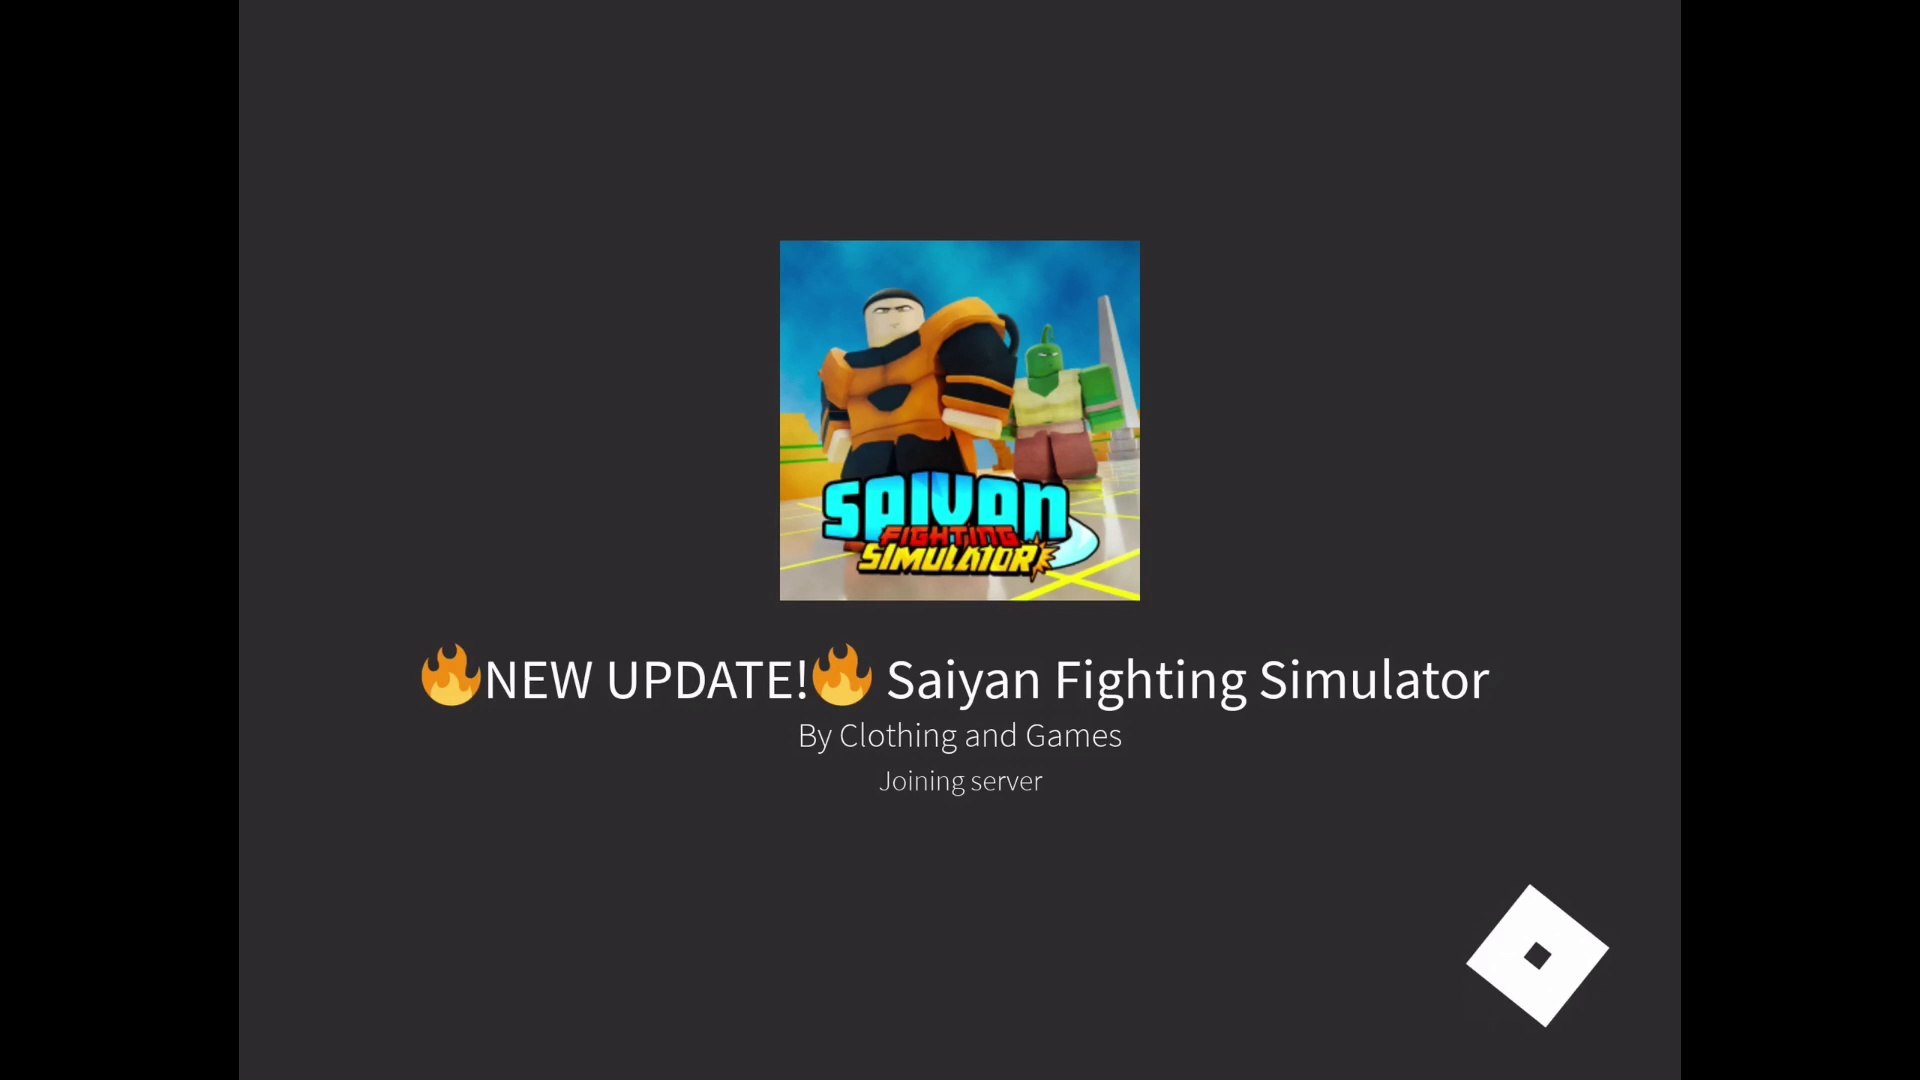 New Sfs All Free Codes Saiyan Fighting Simulator Super Saiyan Simulator 3 New Quest Update Video Dailymotion - saiyan simulator roblox v3rmillion